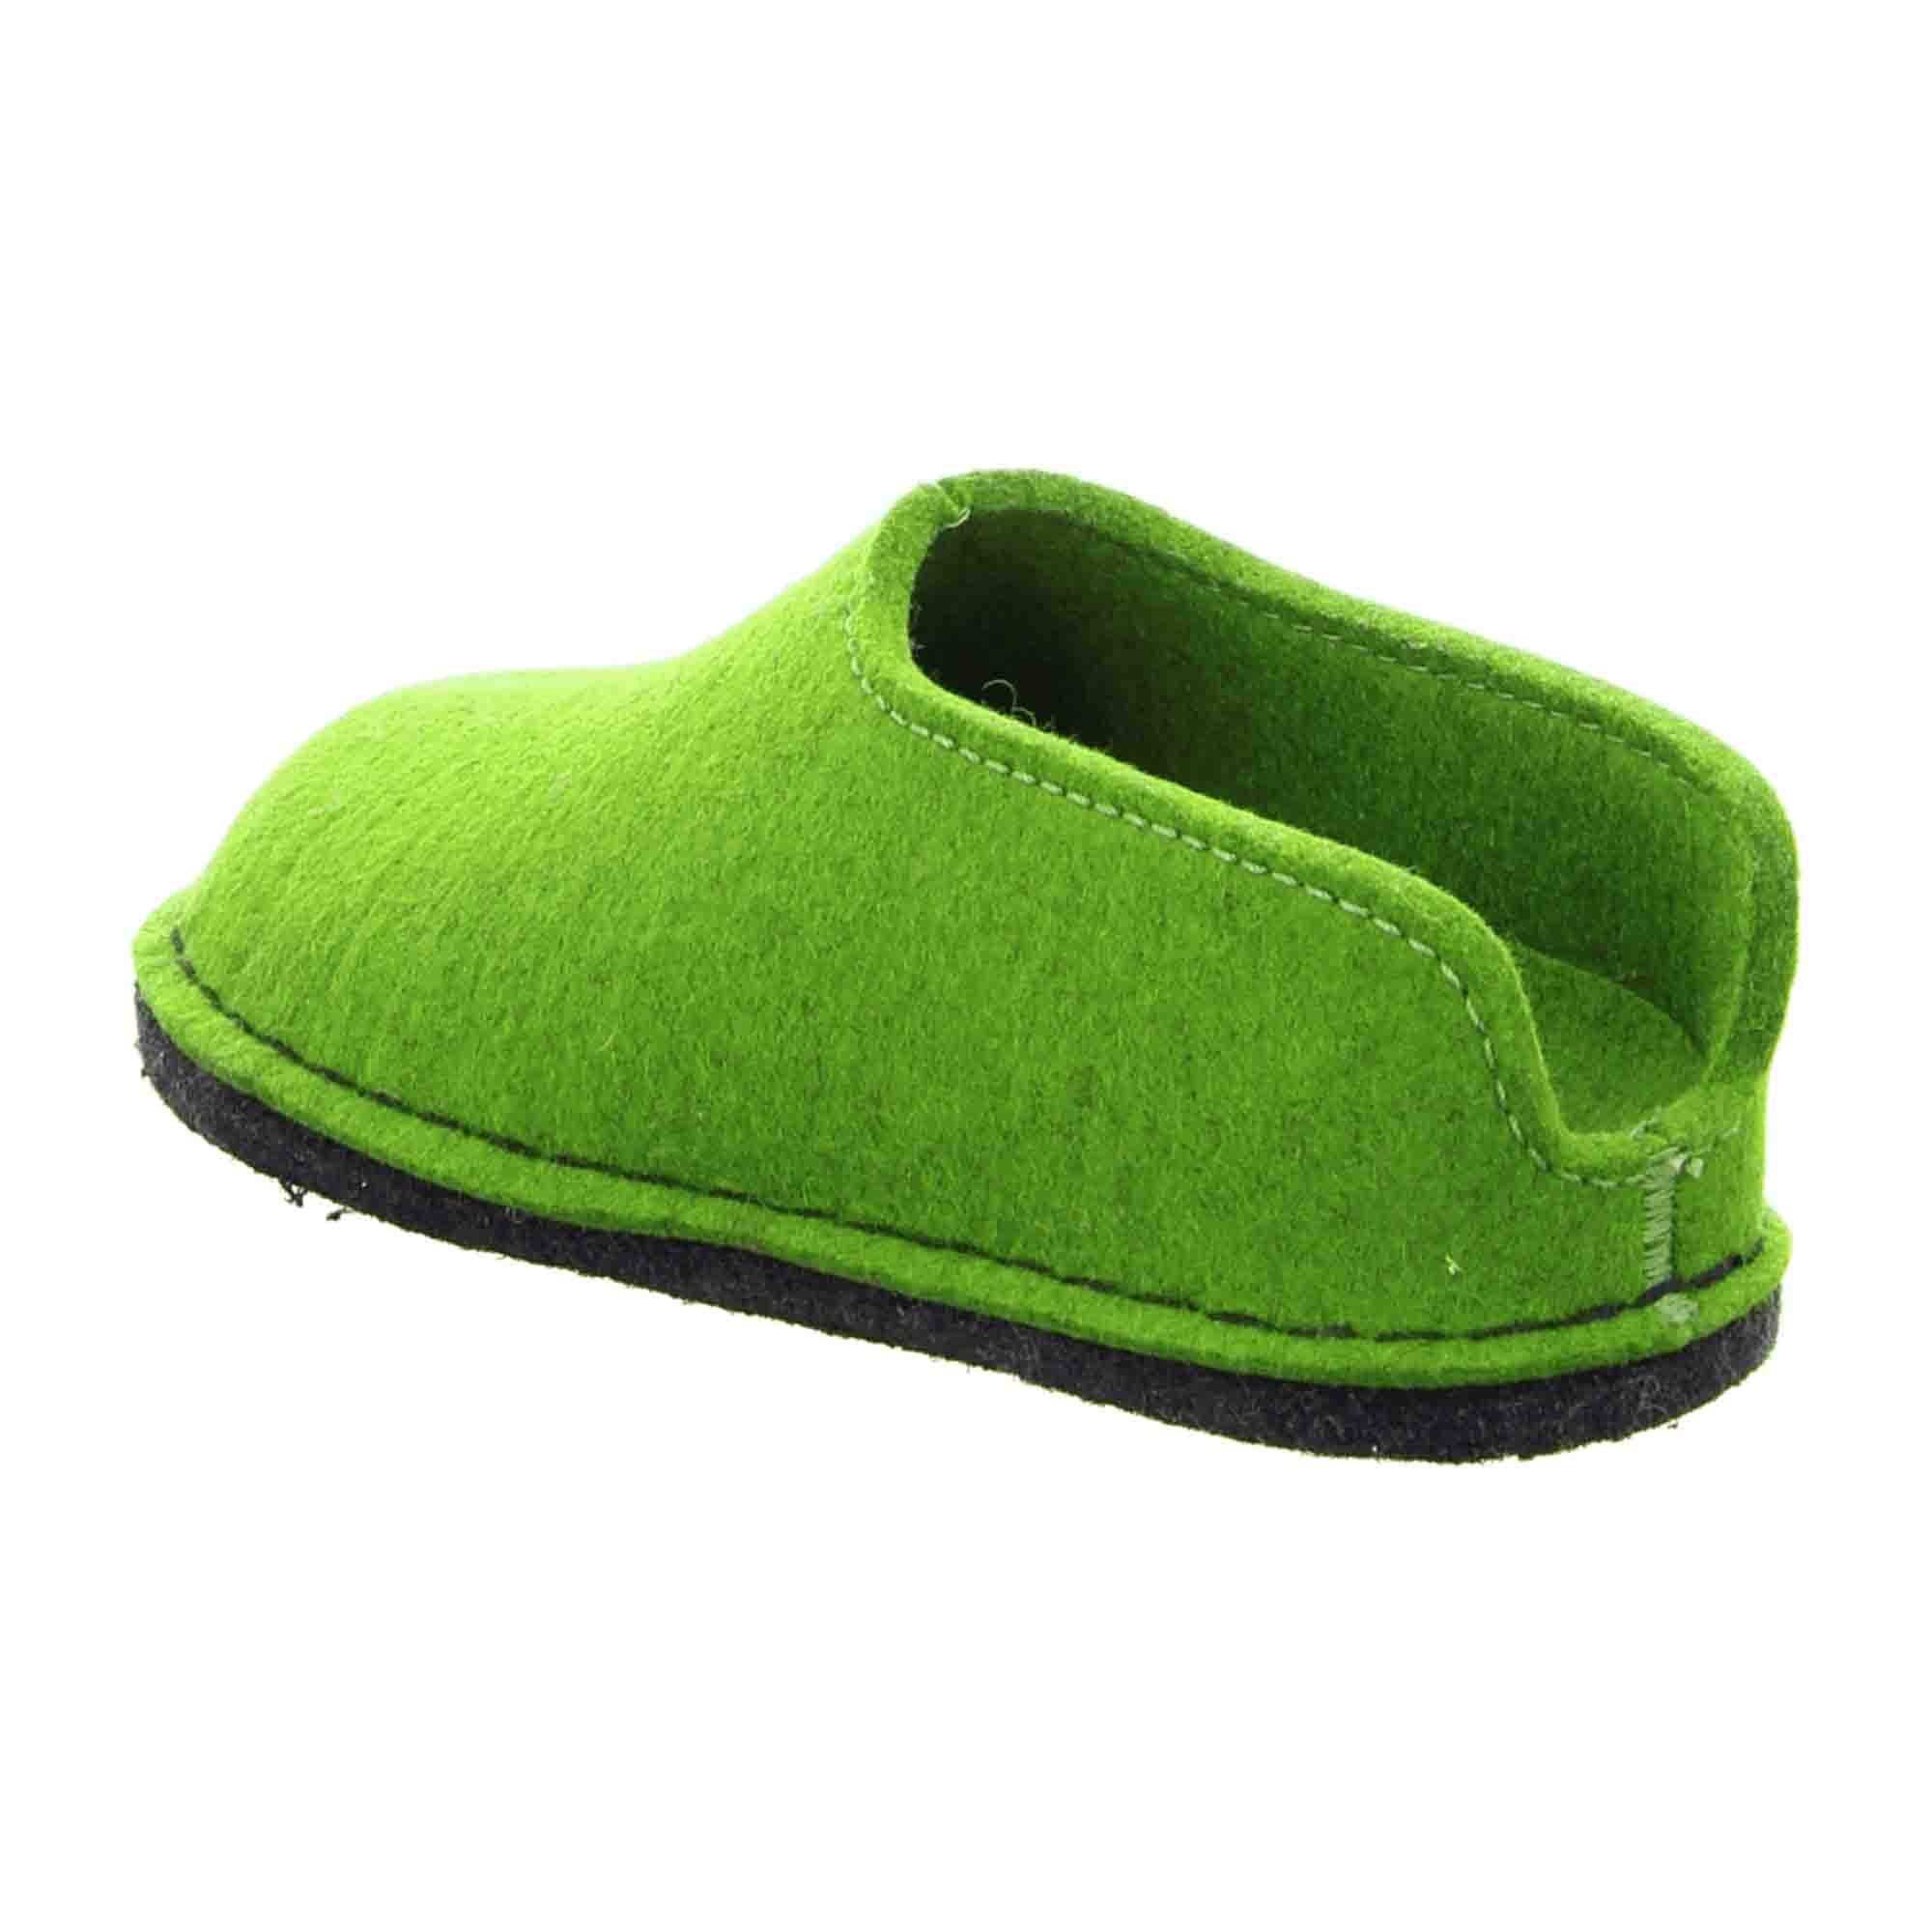 Haflinger 311013 Men's Comfort Slippers, Trendy Green